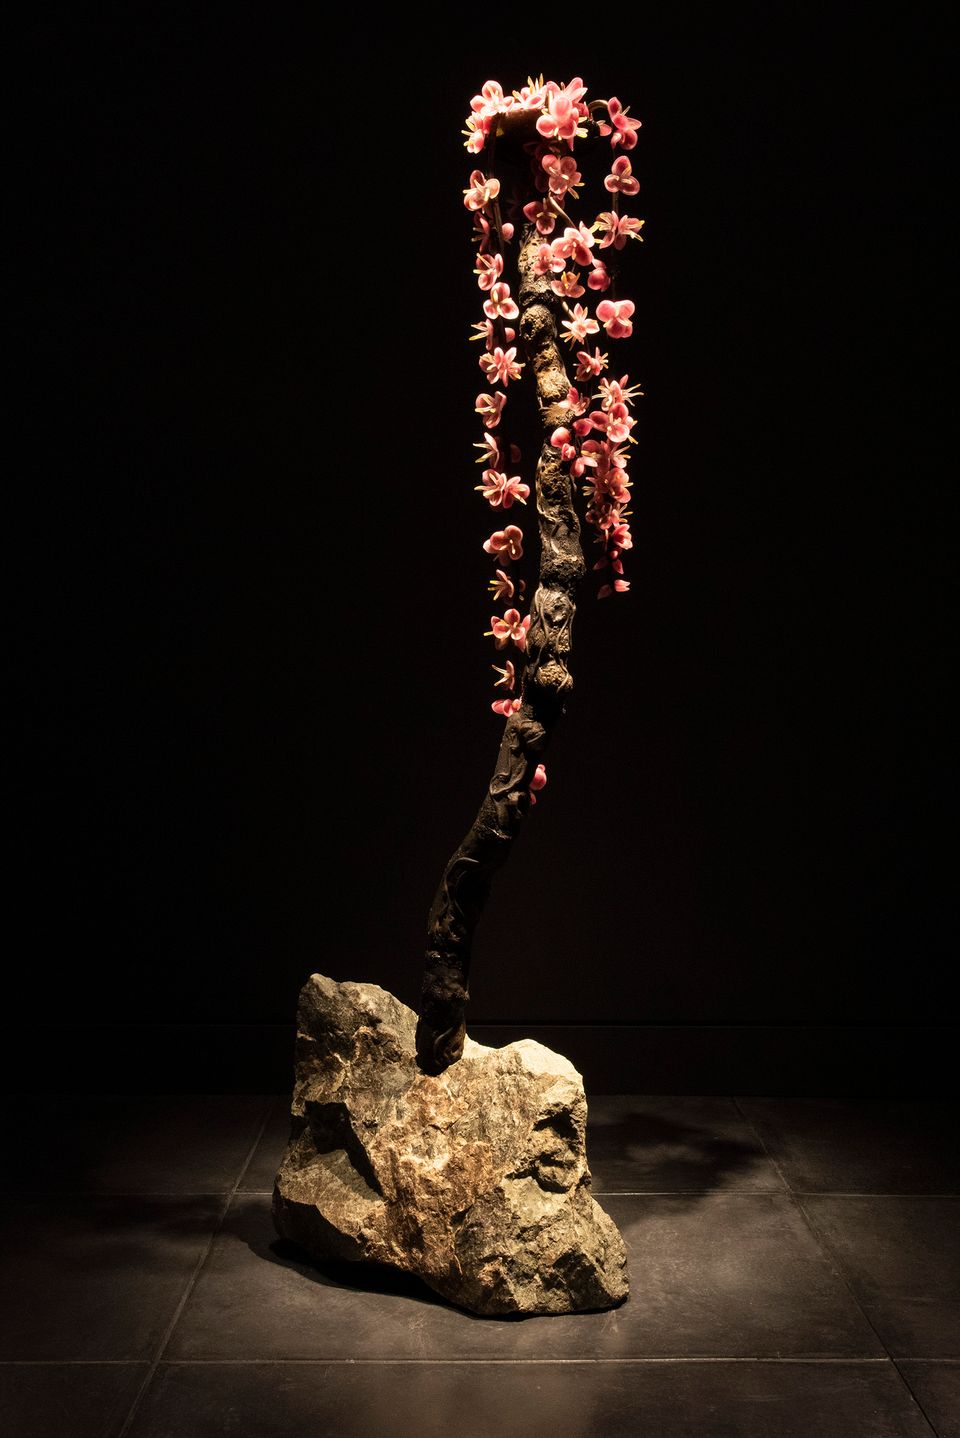 A photograph of artwork resembling flowers 